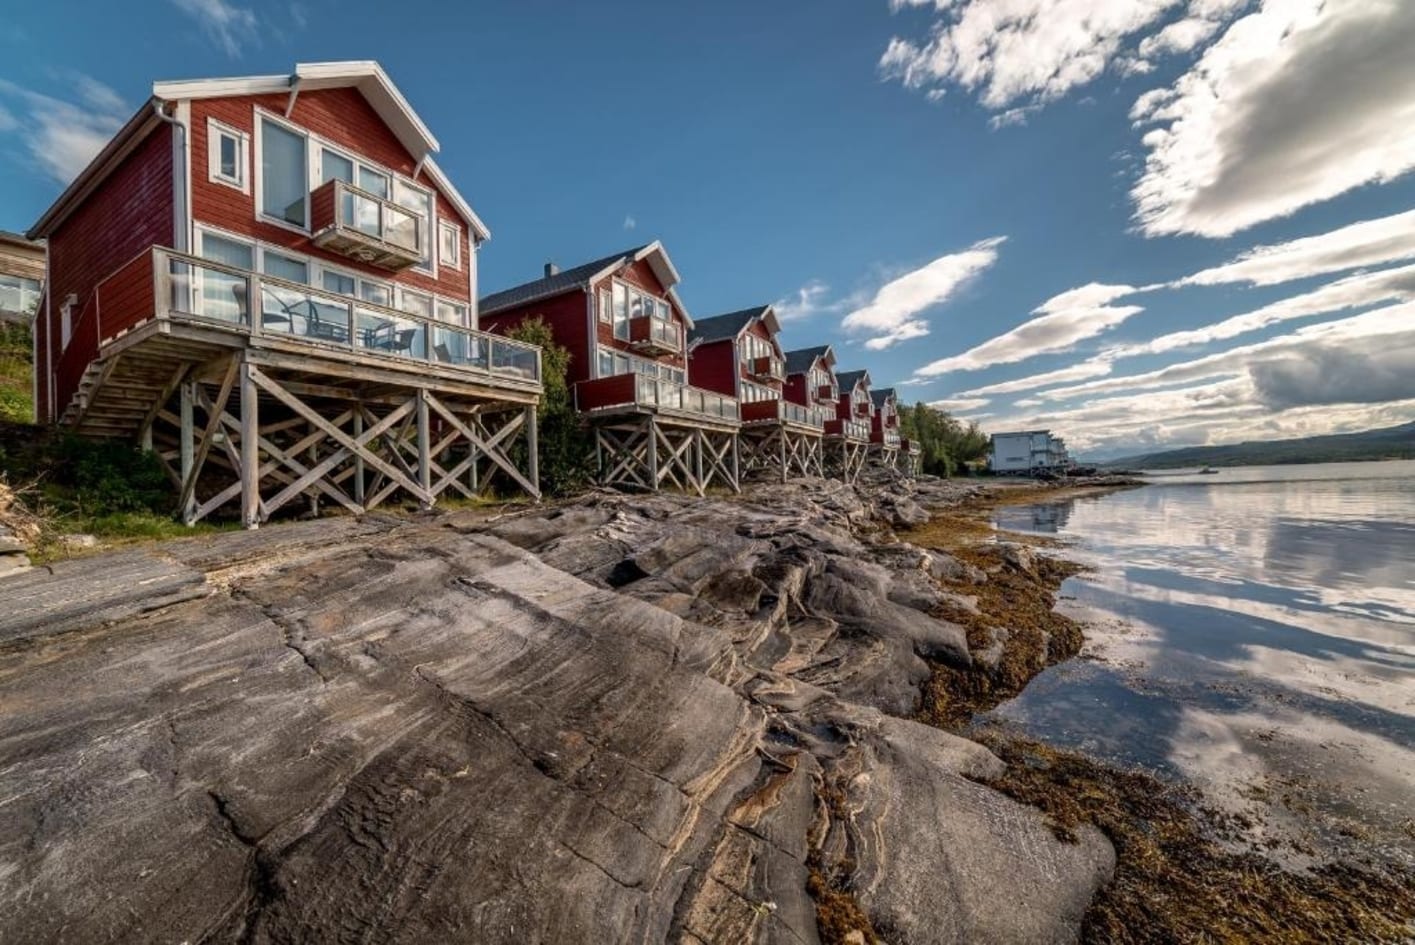 Malangen Resort, a waterfront resort with Tromso luxury cabins